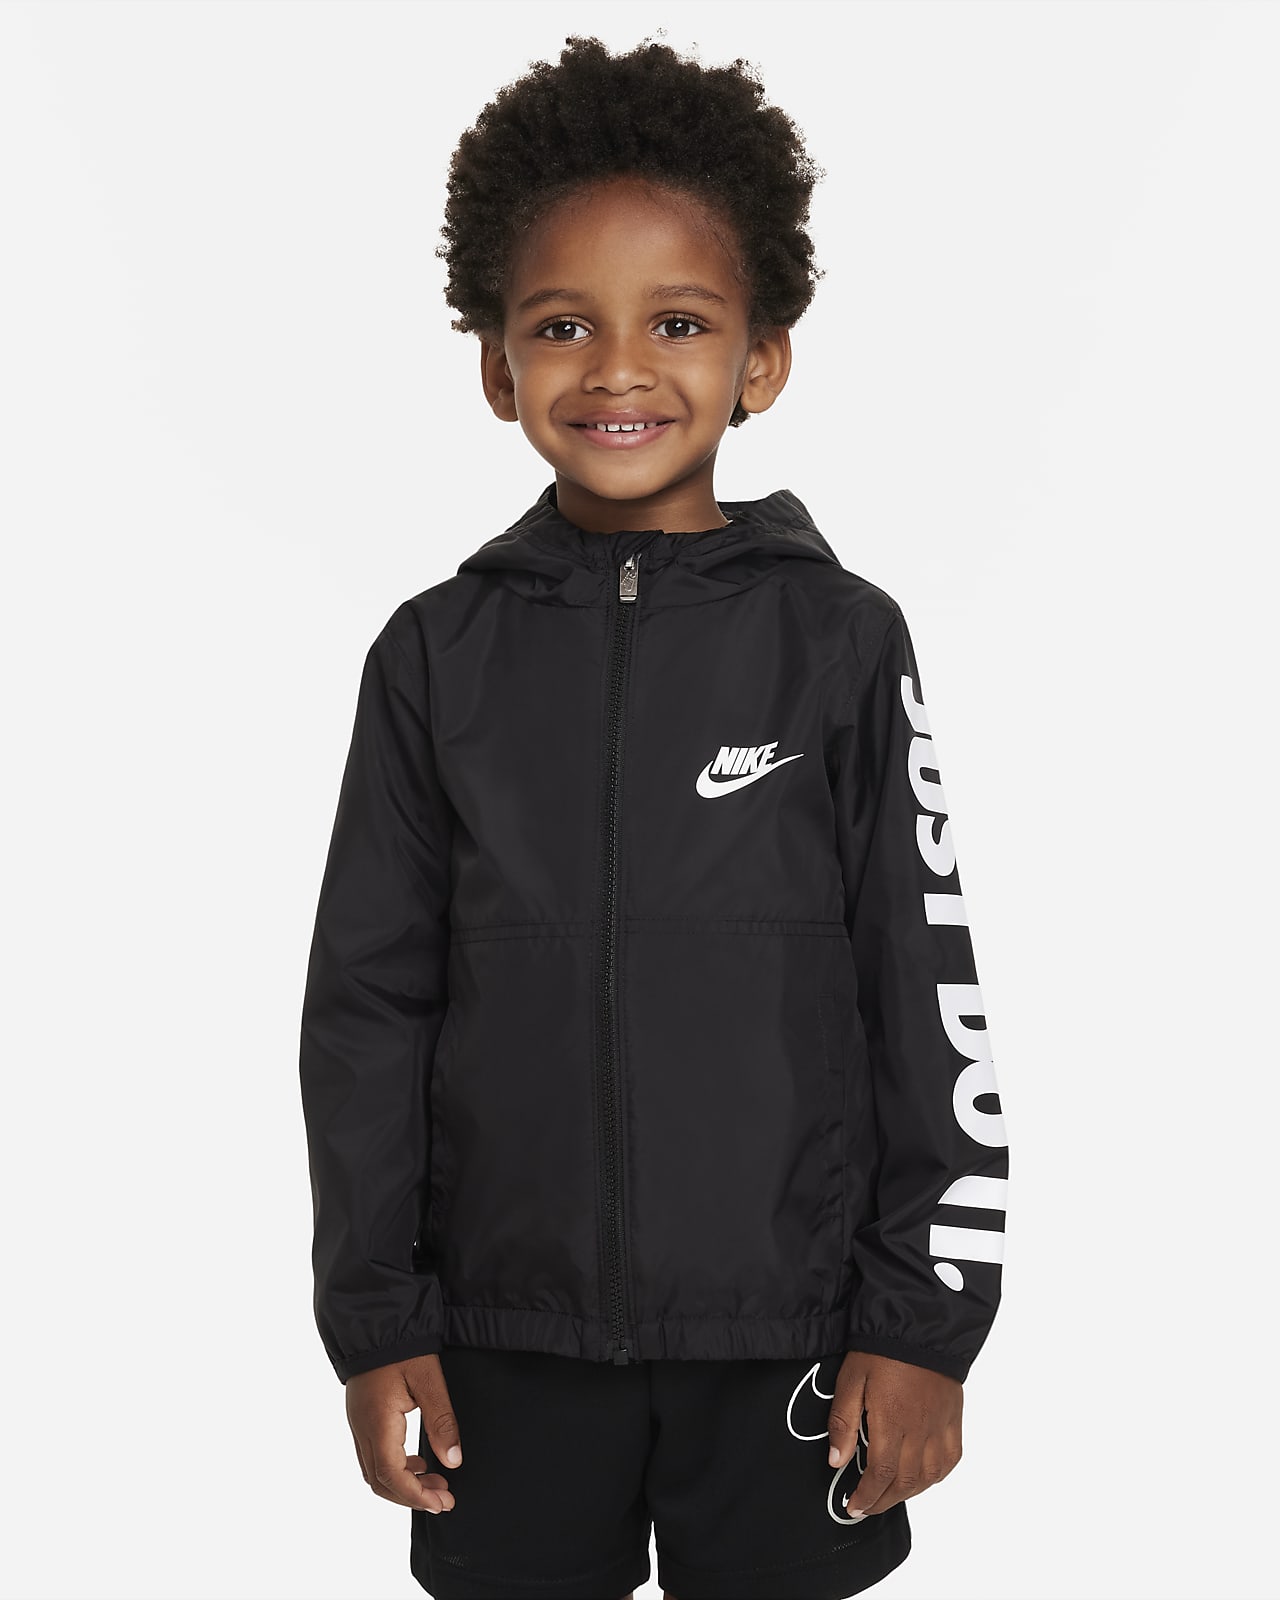 Nike Younger Kids' Jacket